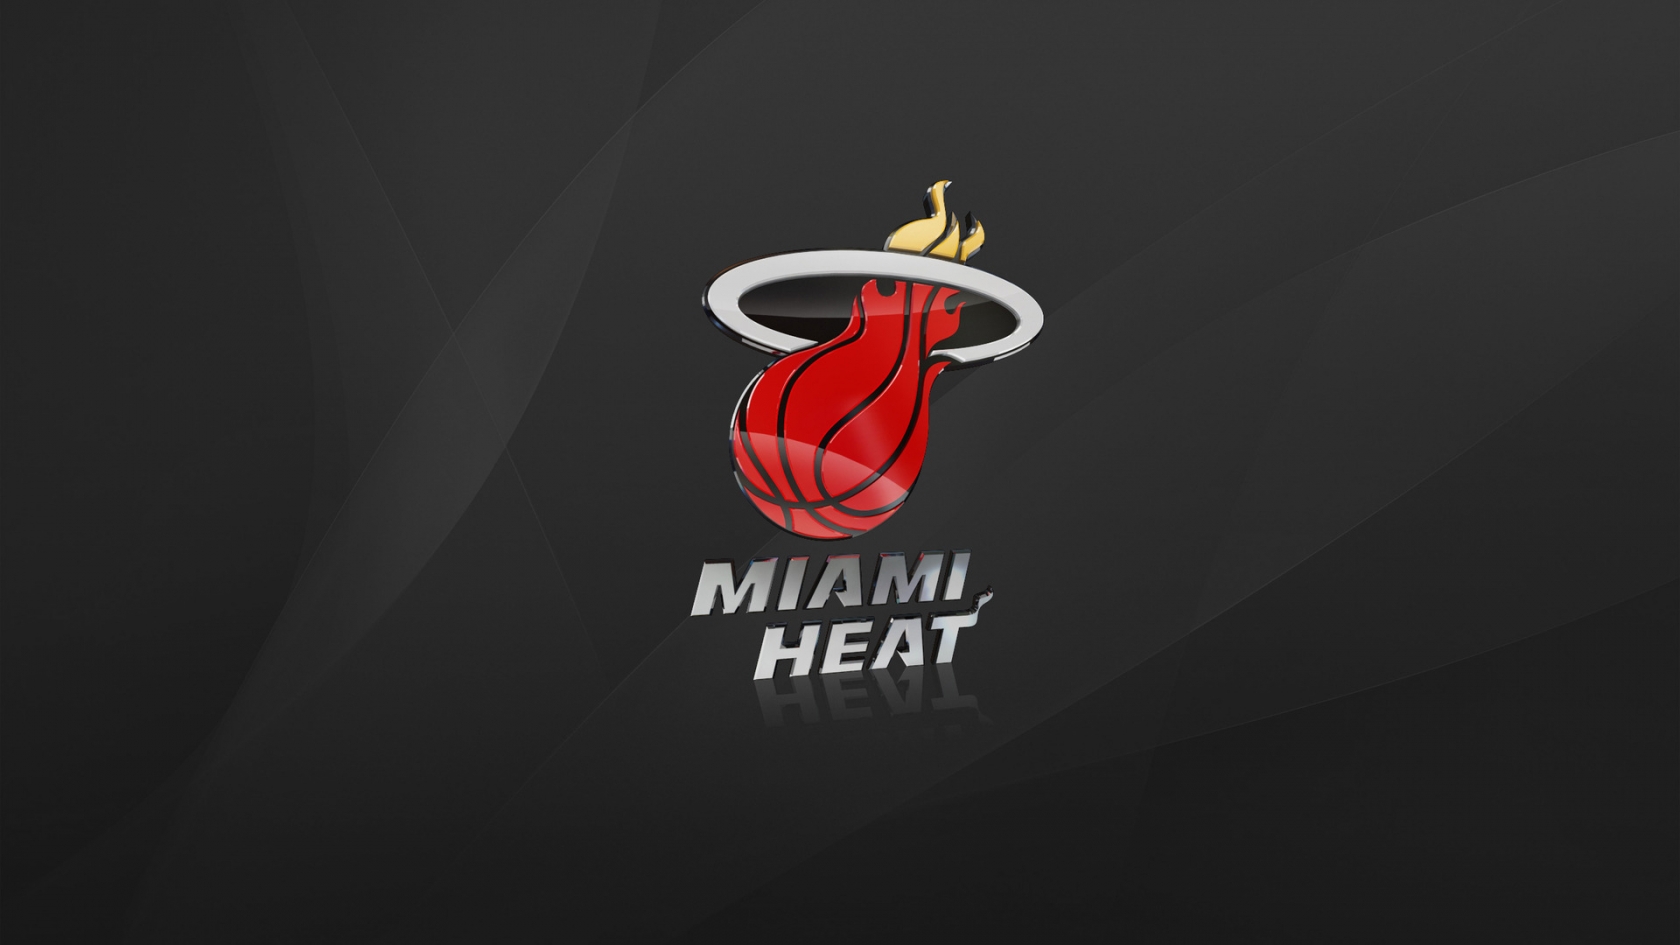 Miami Heat for 1680 x 945 HDTV resolution